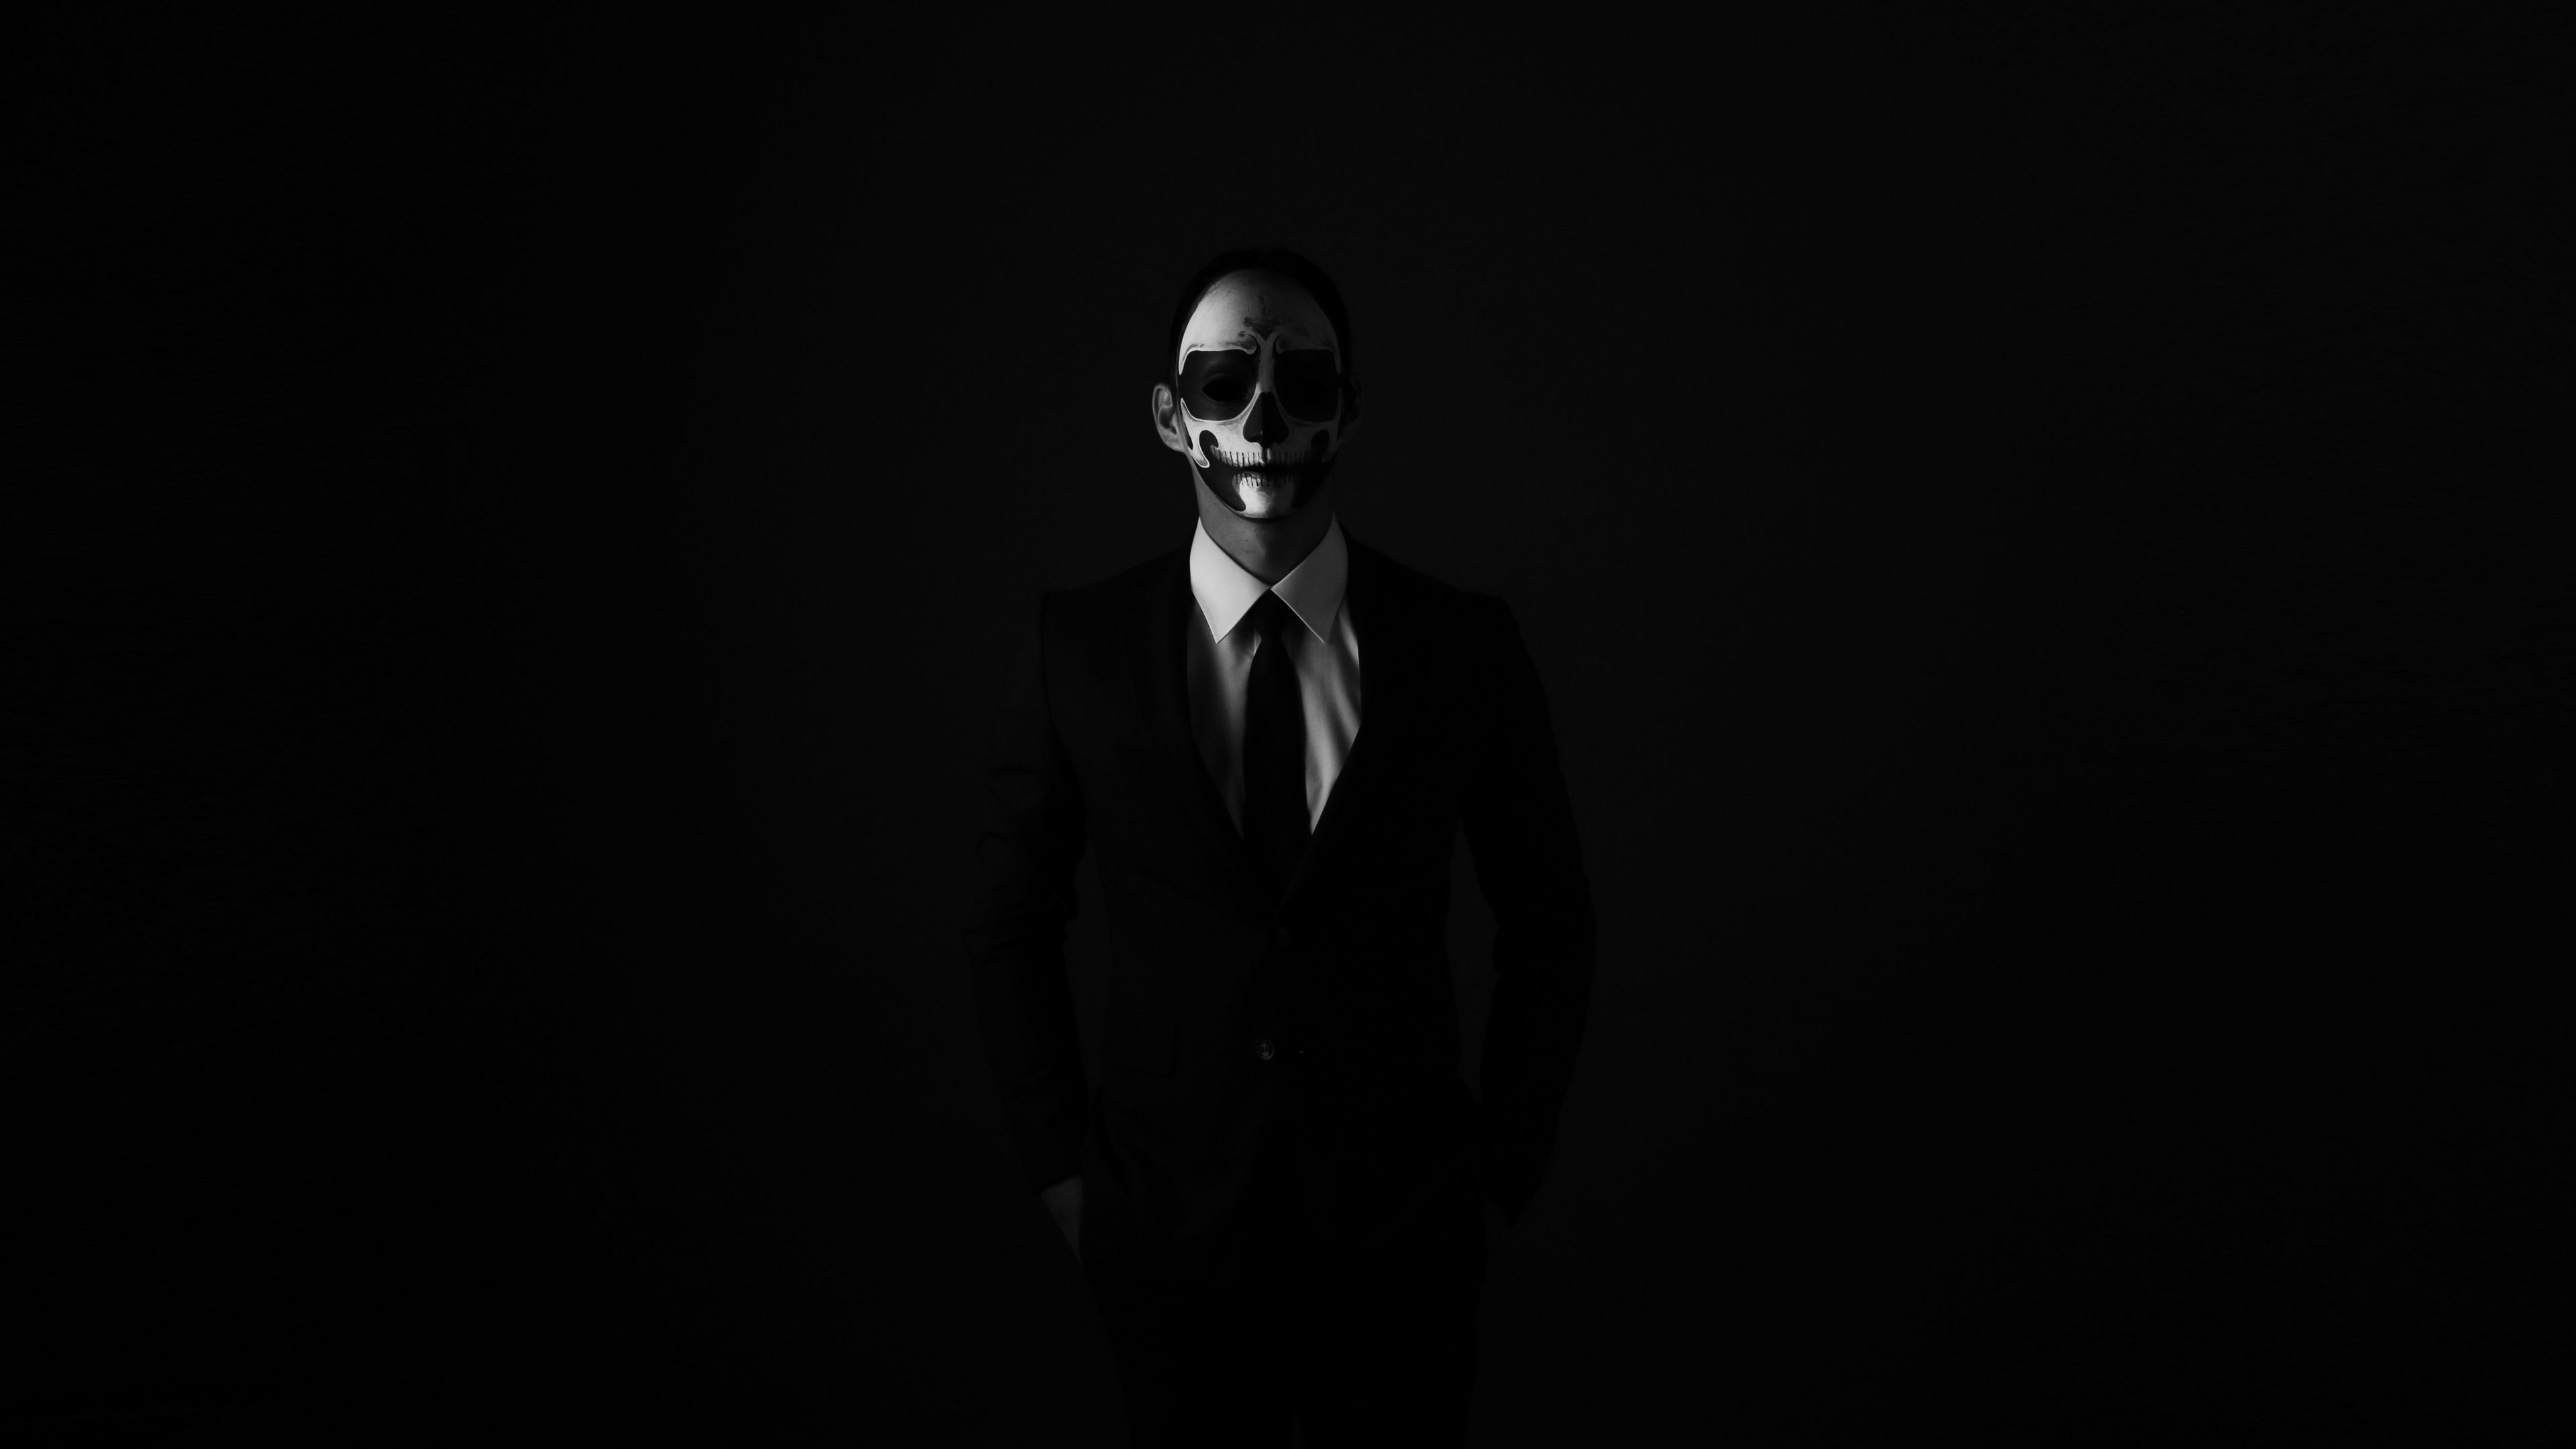 Wallpaper 4k mask, anonymous, bw, tie, suit jacket, shirt, dark 4k Anonymous, bw, Mask